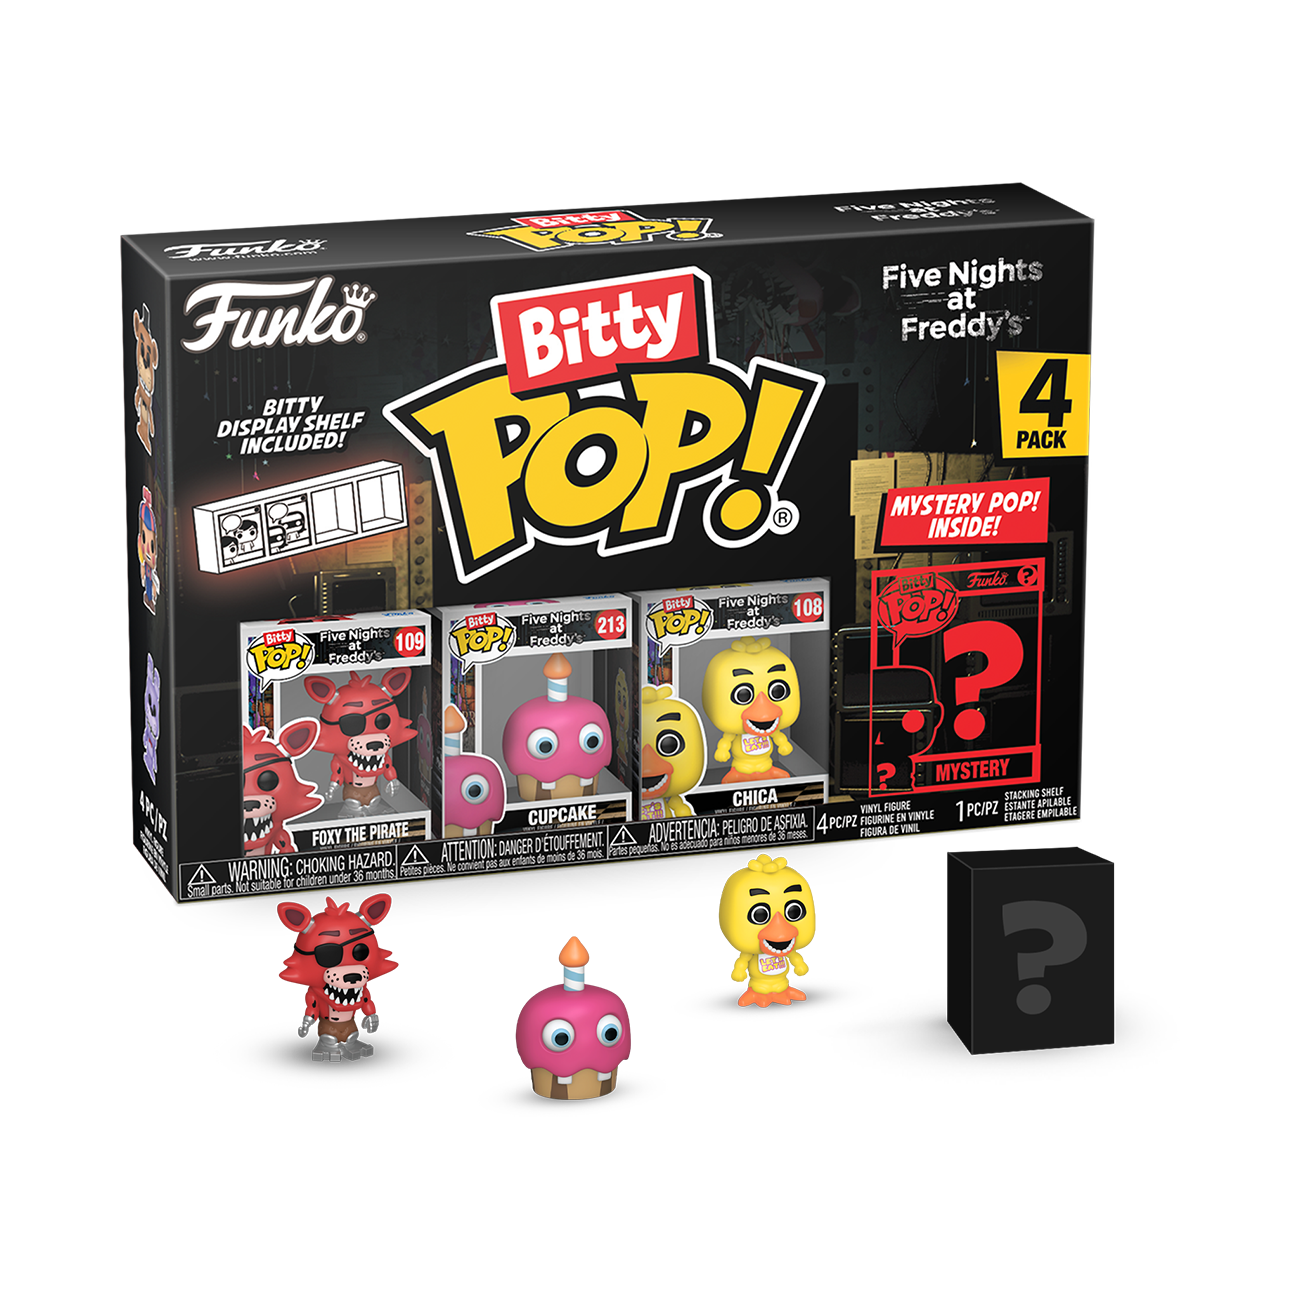 https://media.gamestop.com/i/gamestop/20004339/Funko-Bitty-POP-Five-Nights-at-Freddys-0.9-in-Vinyl-Figure-Set-4-Pack-Foxy-the-Pirate-Cupcake-Chica-Mystery-Pop?$pdp$